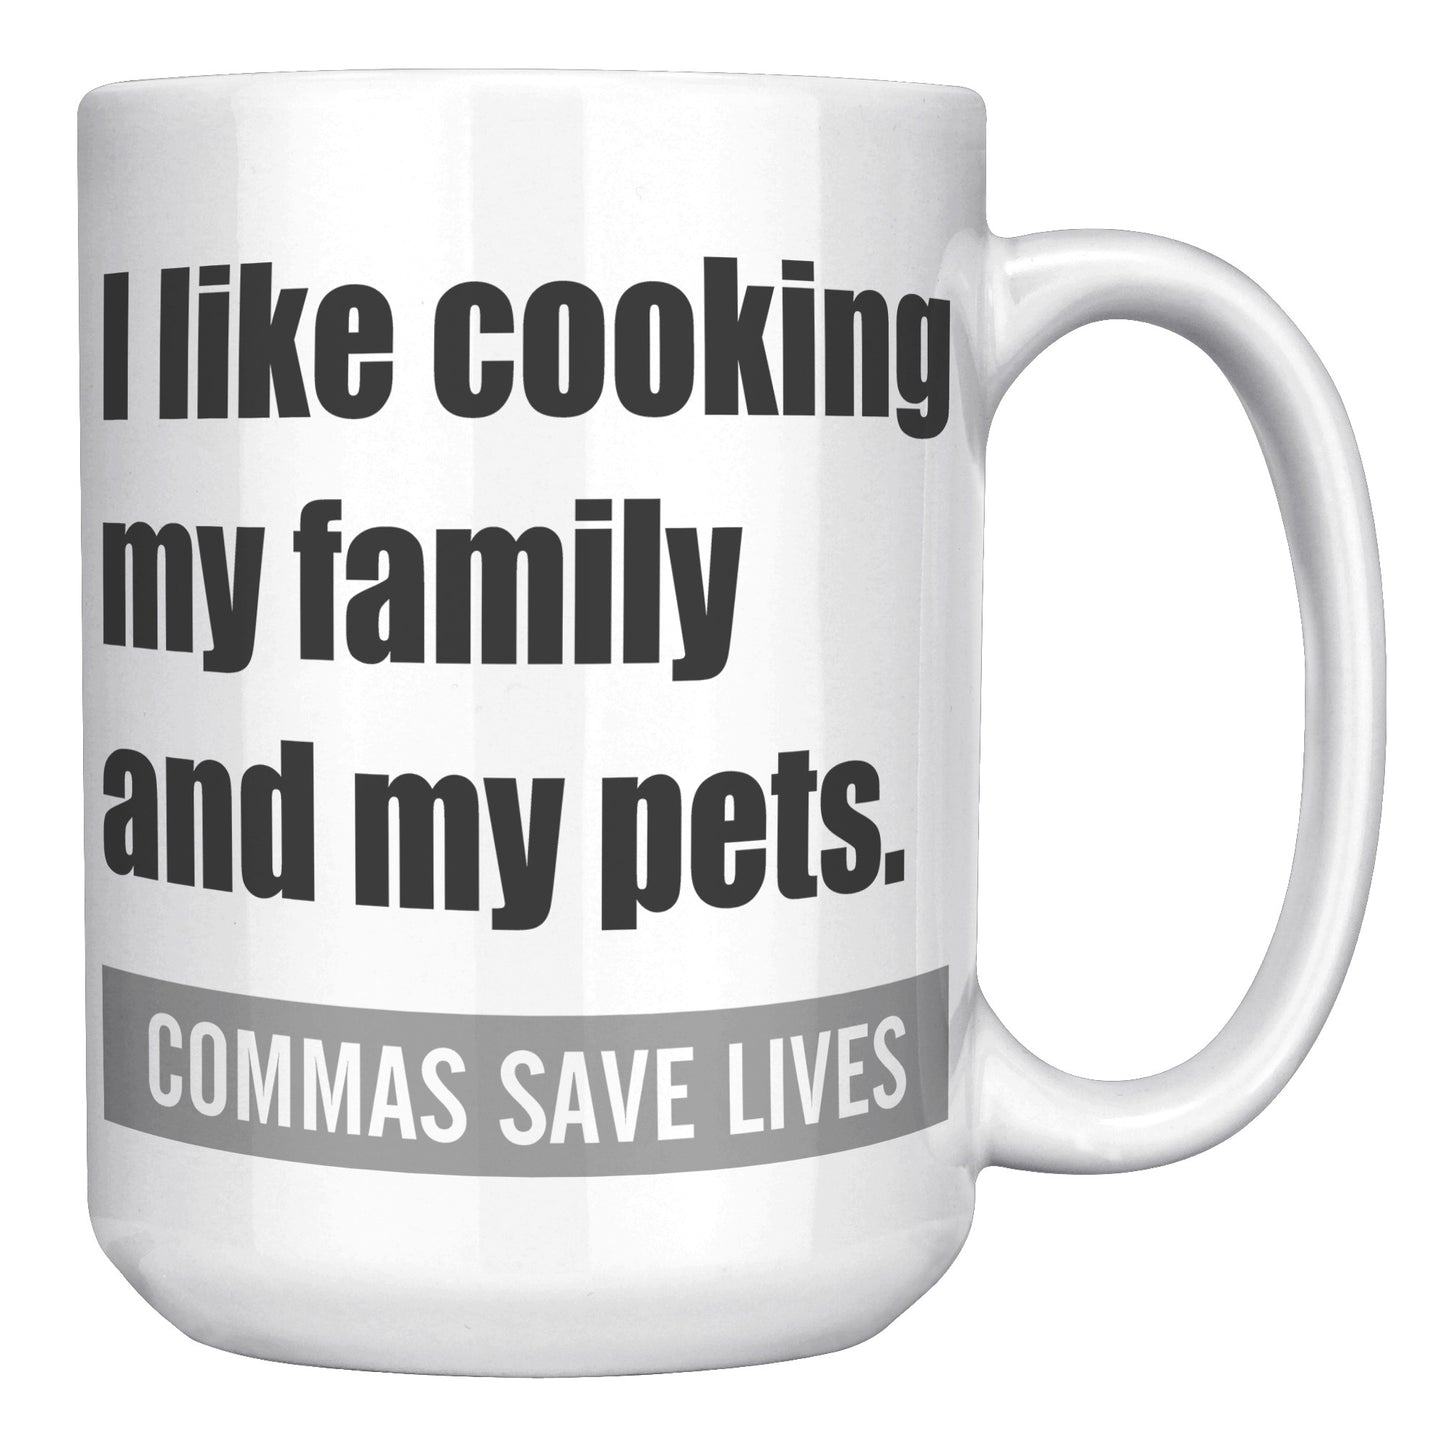 I Like Cooking My Family And My Pets. Commas Save Lives | Mug